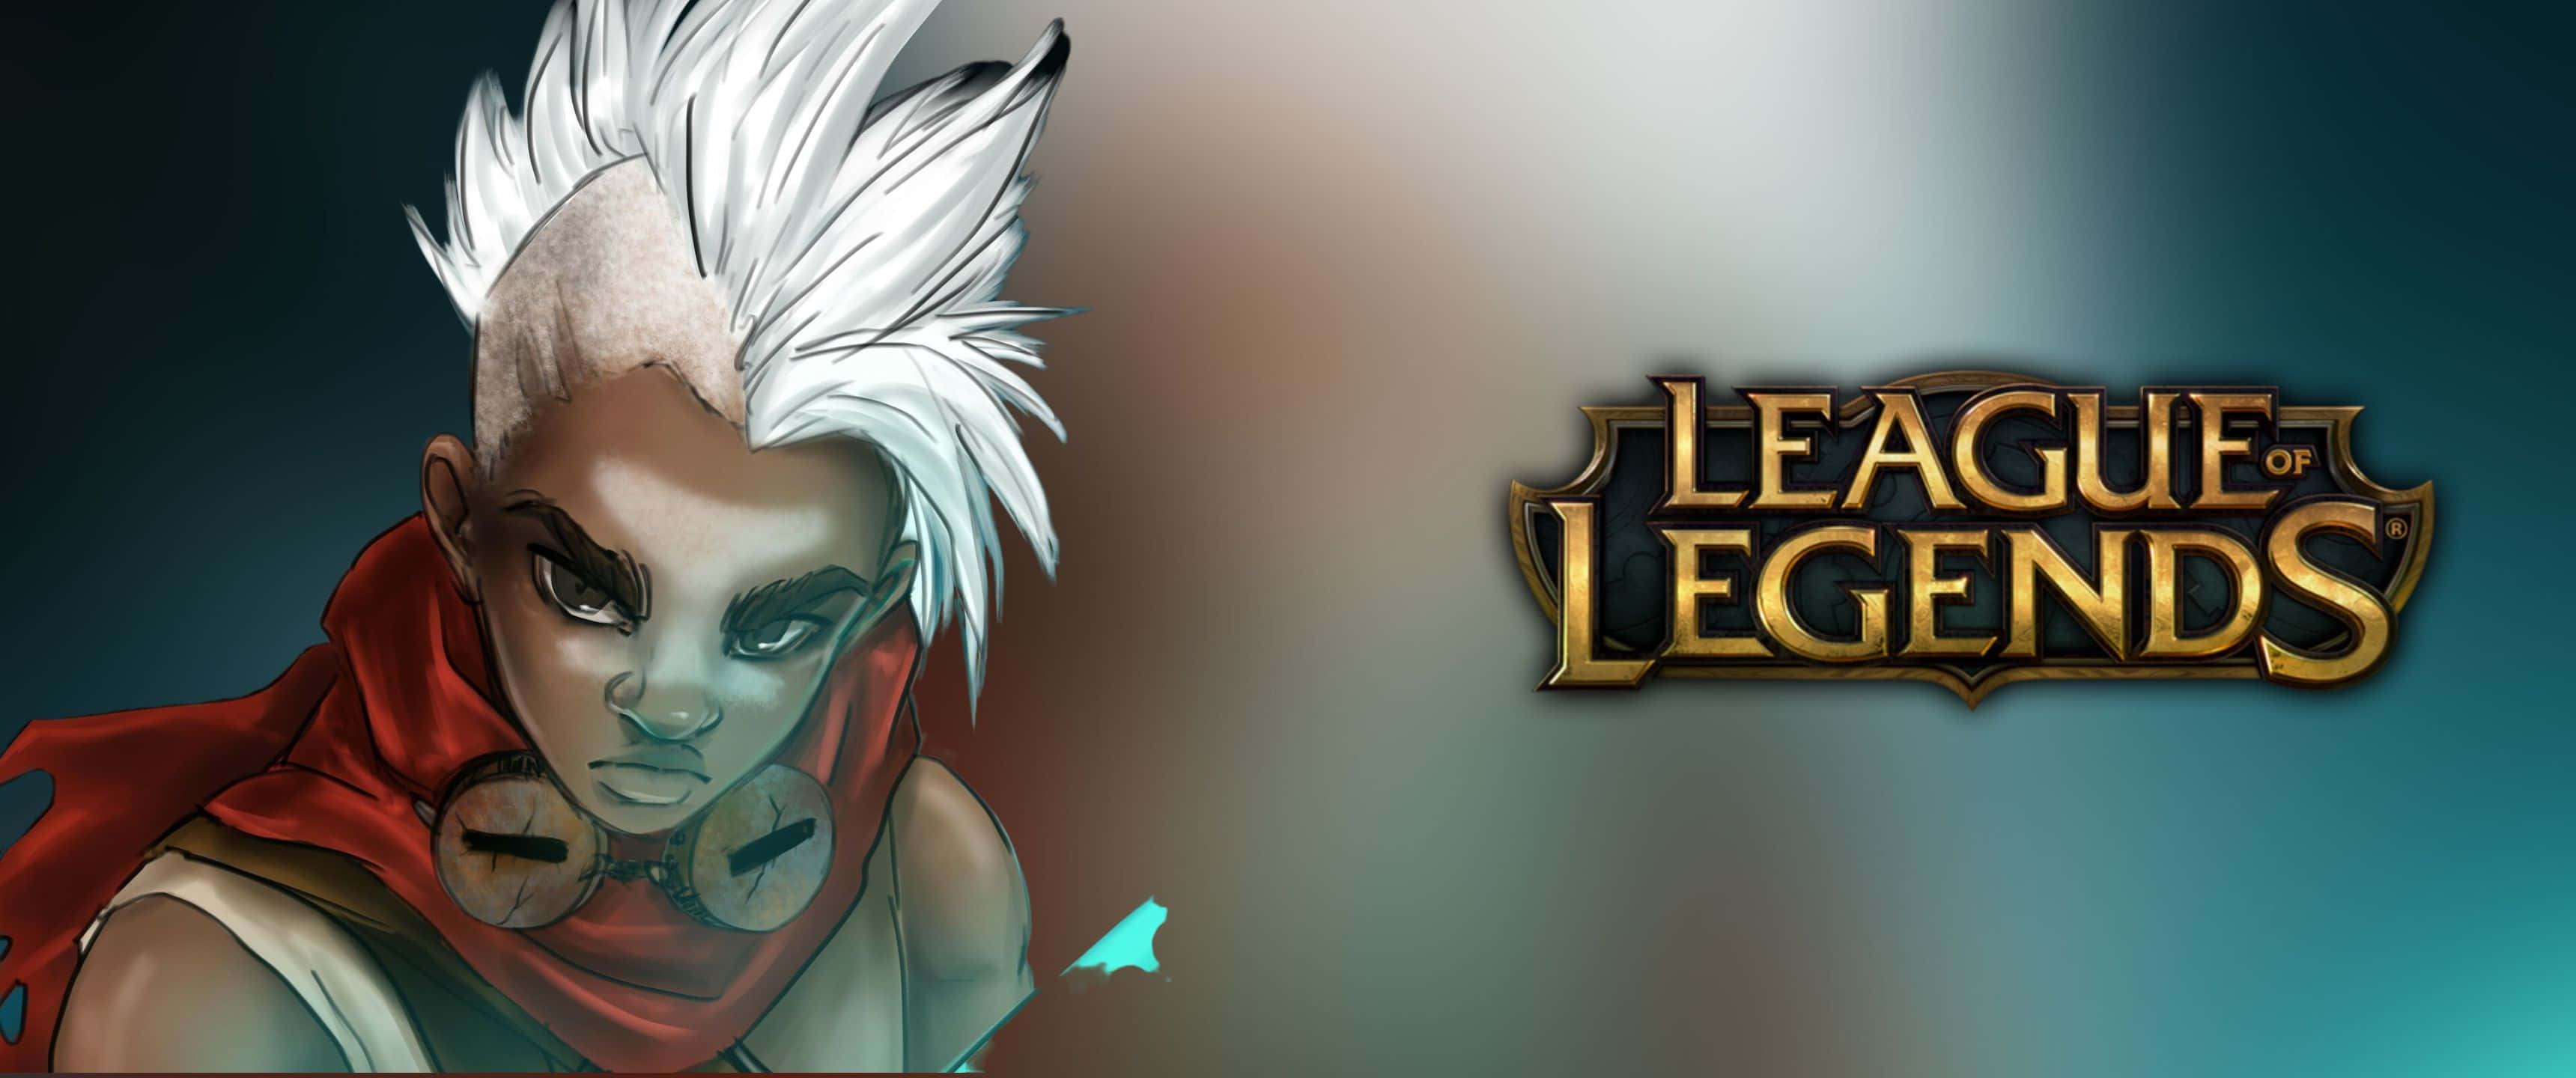 Ekko 3440x1440p League Of Legends Background